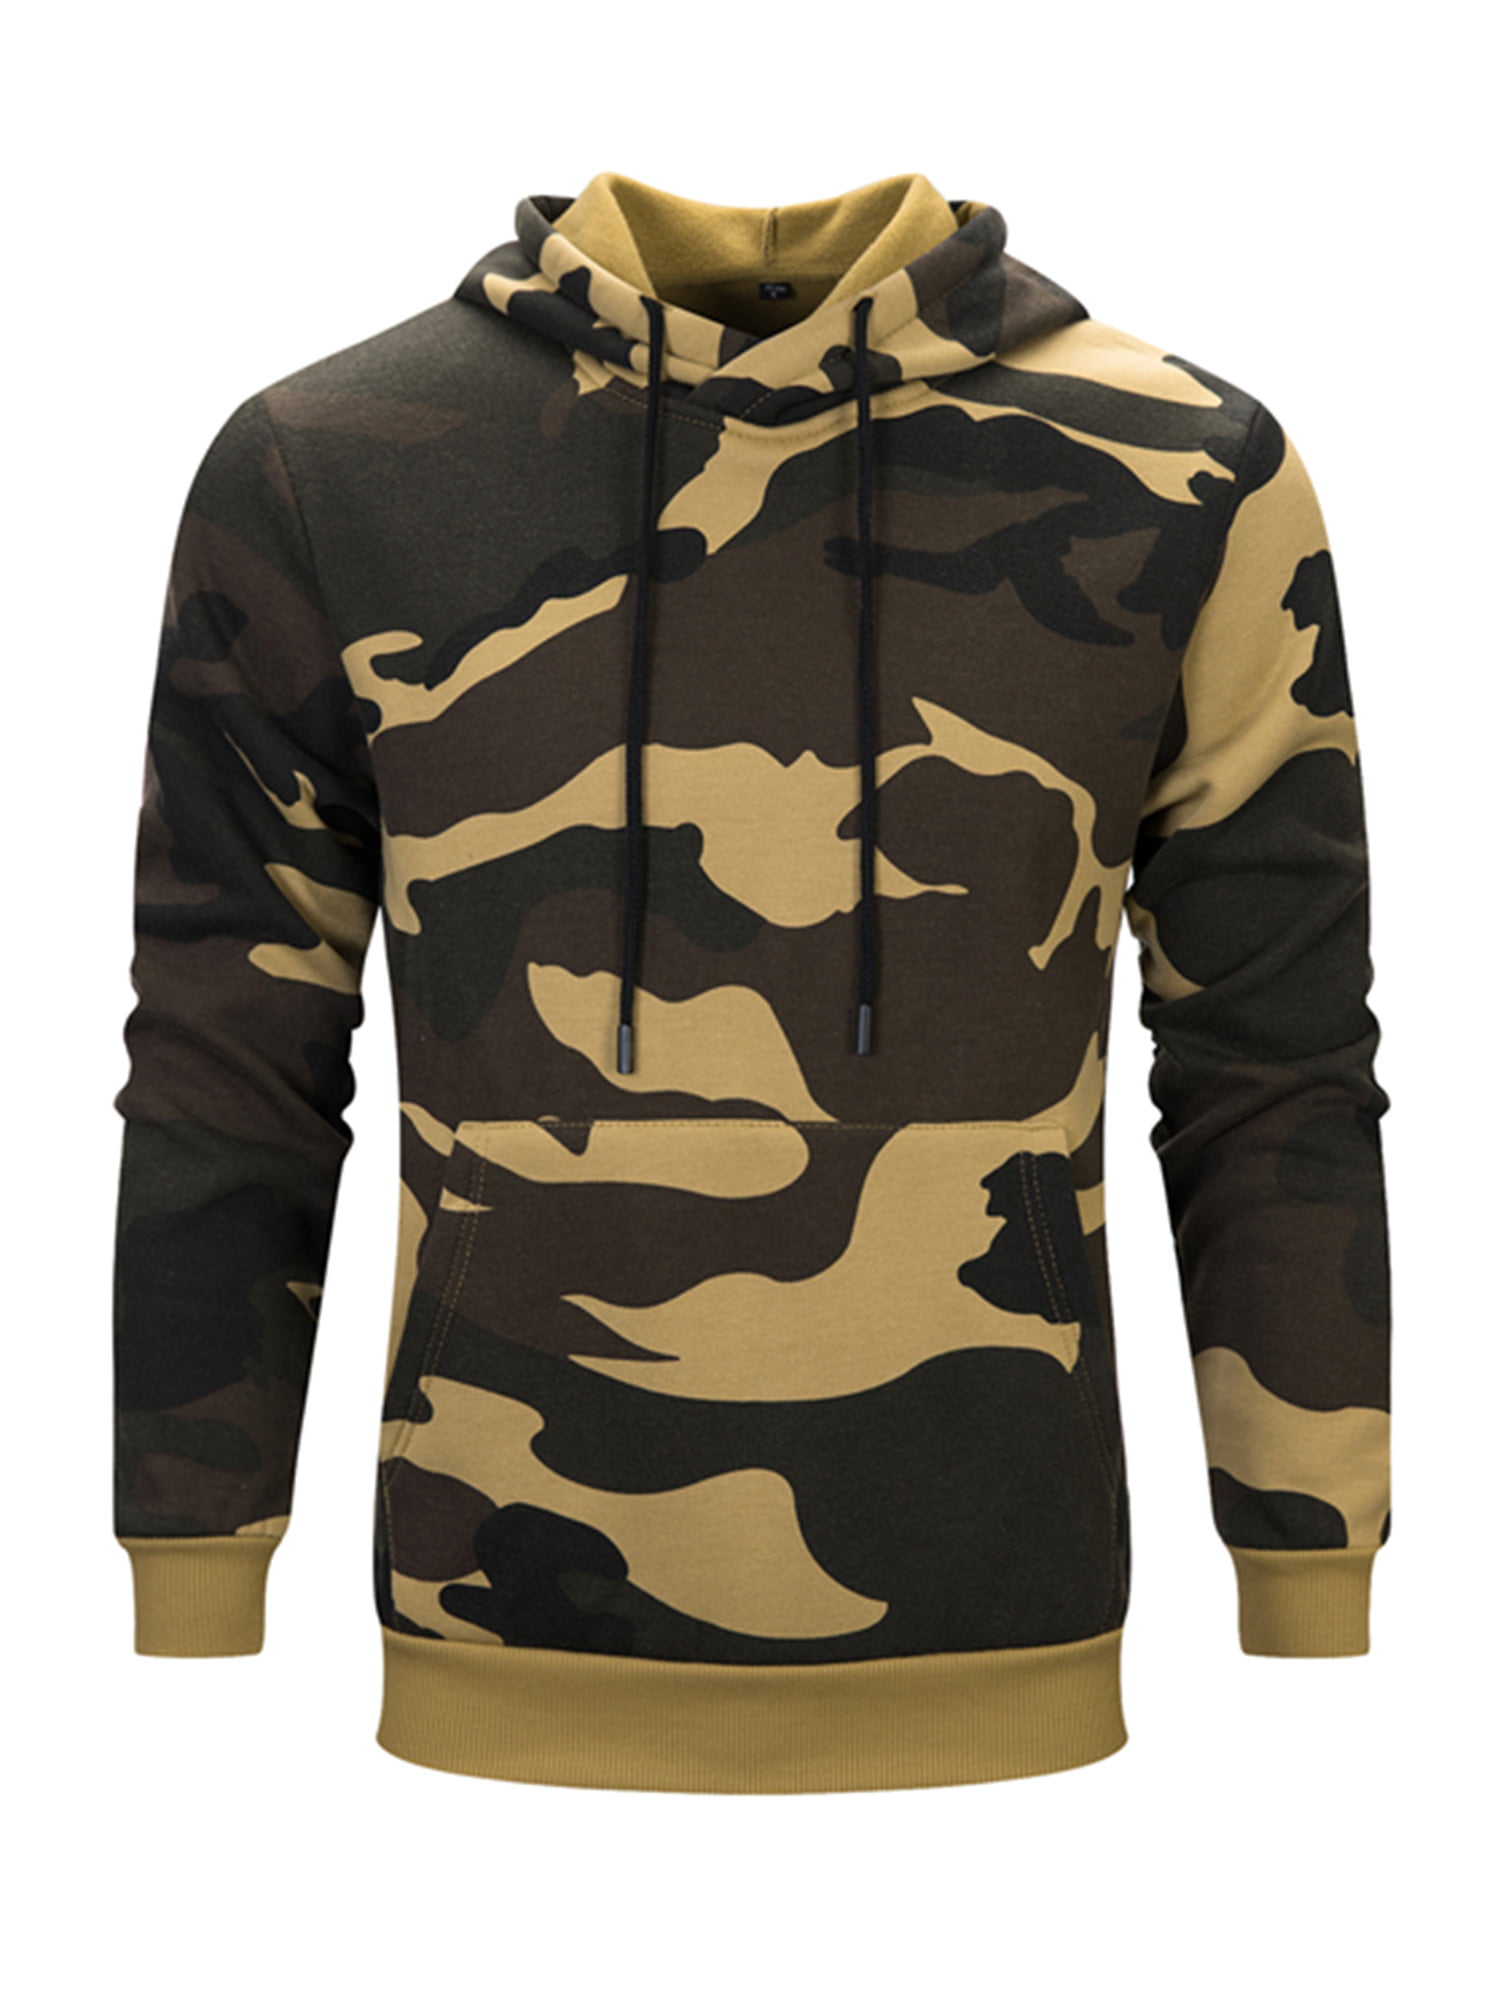 Go V Men Fashion Hoodies Sweatshirts Camouflage Warm Thick Coat New Male Brand Casual Hoodie Sweatshirt